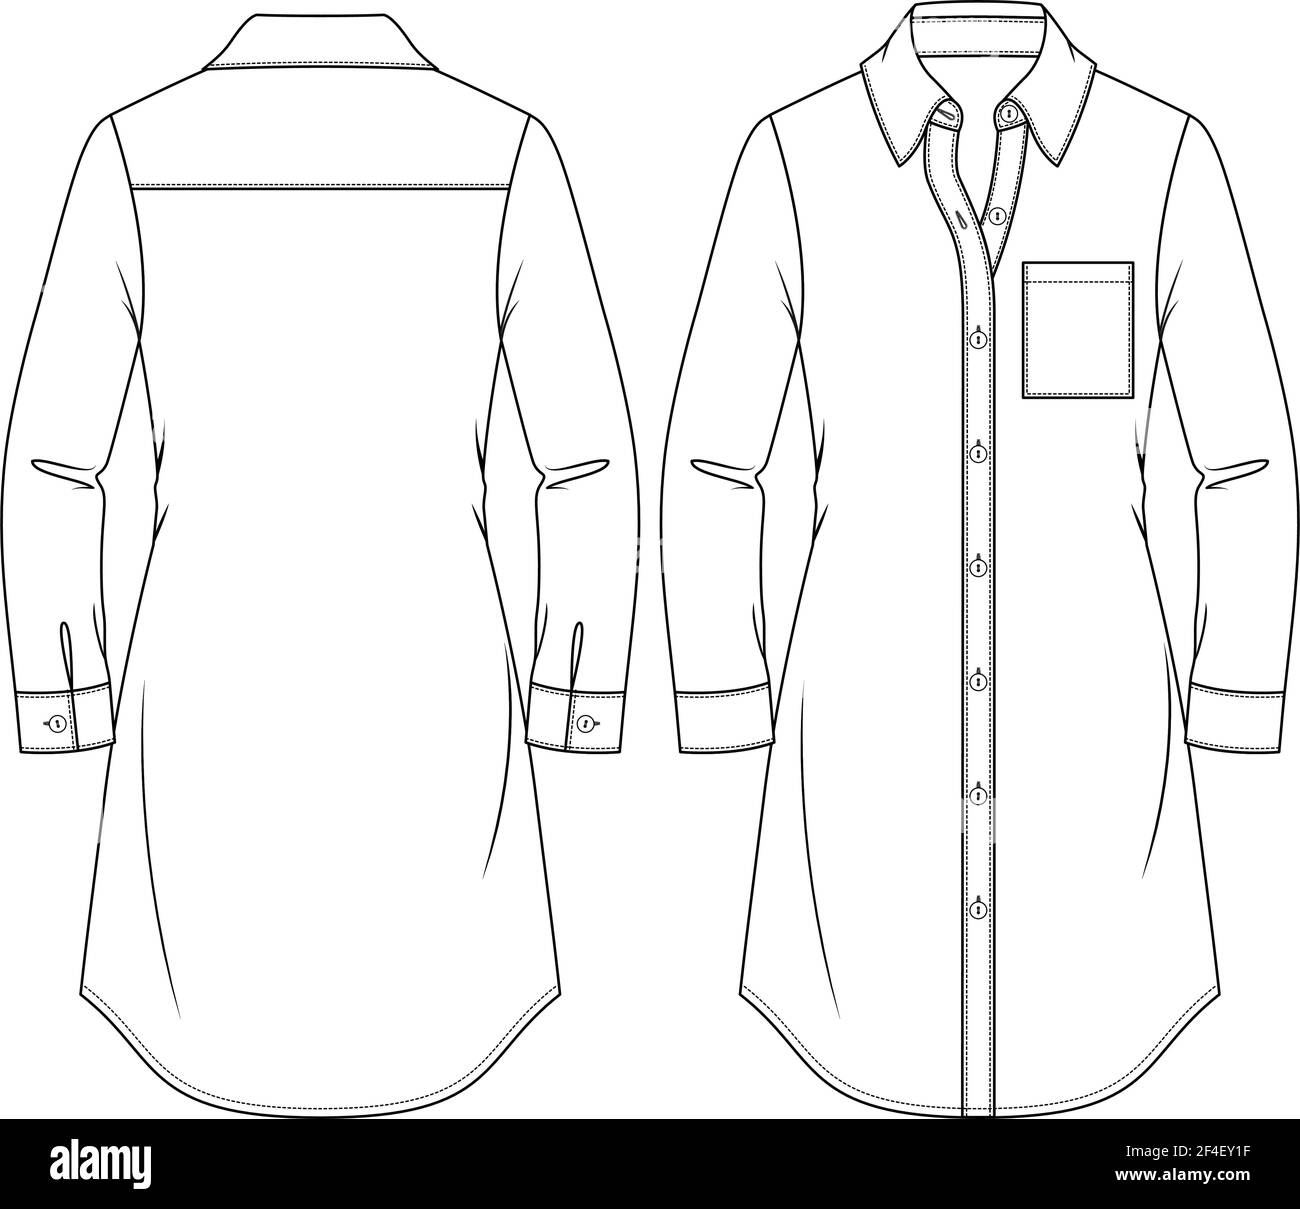 Dress shirt drawing Stock Vector Images - Alamy